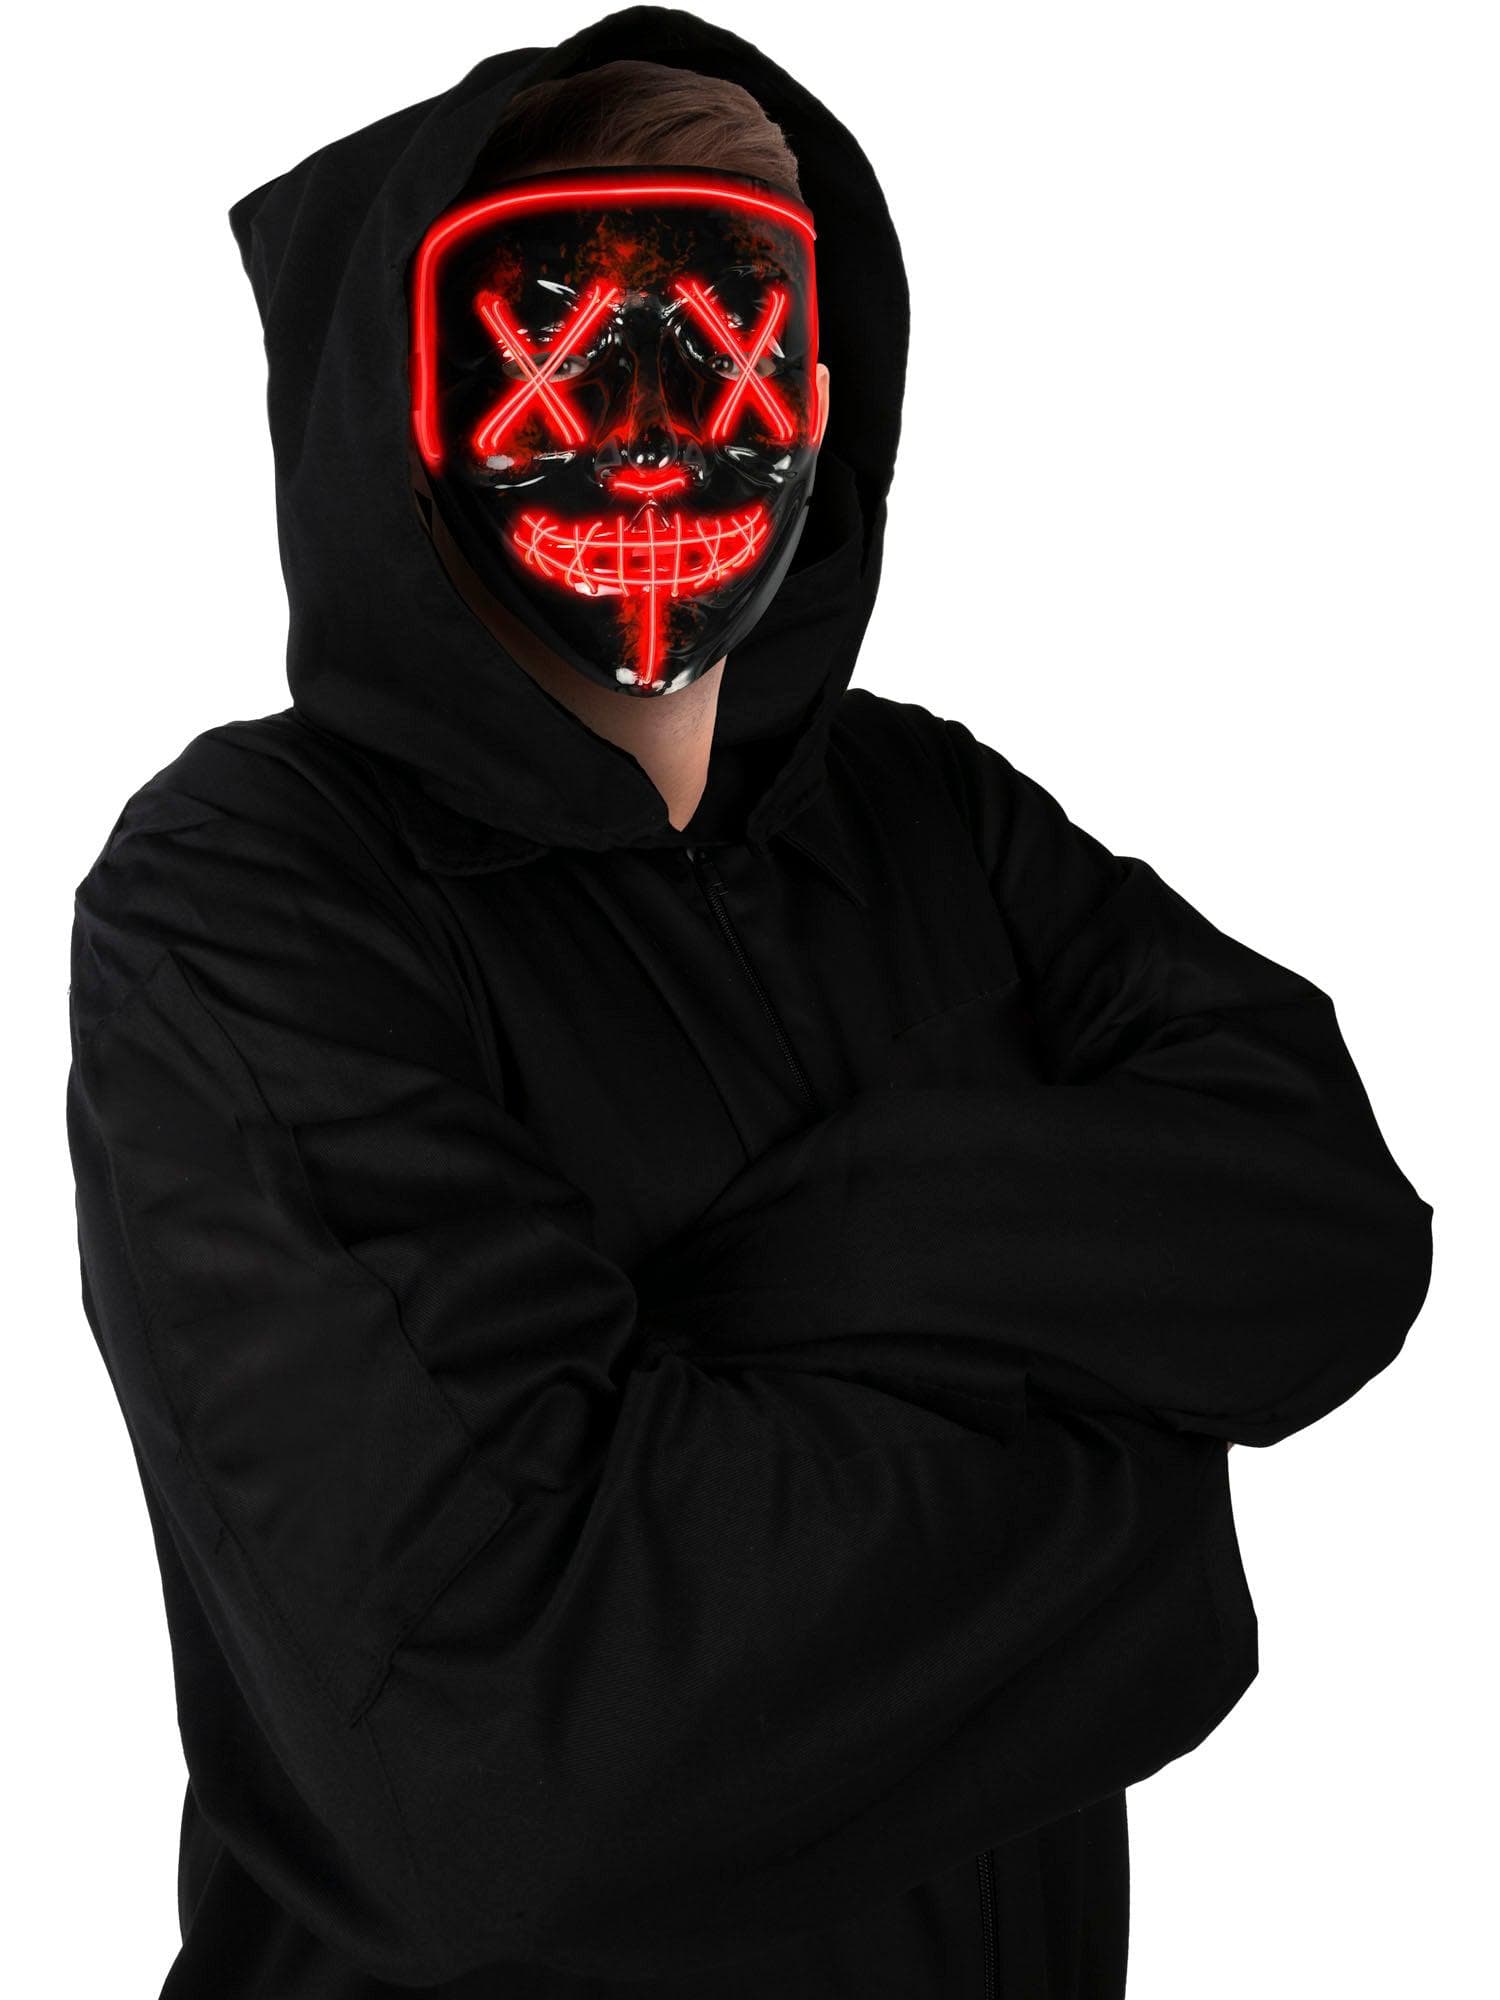 Adult LED Red Mask - costumes.com